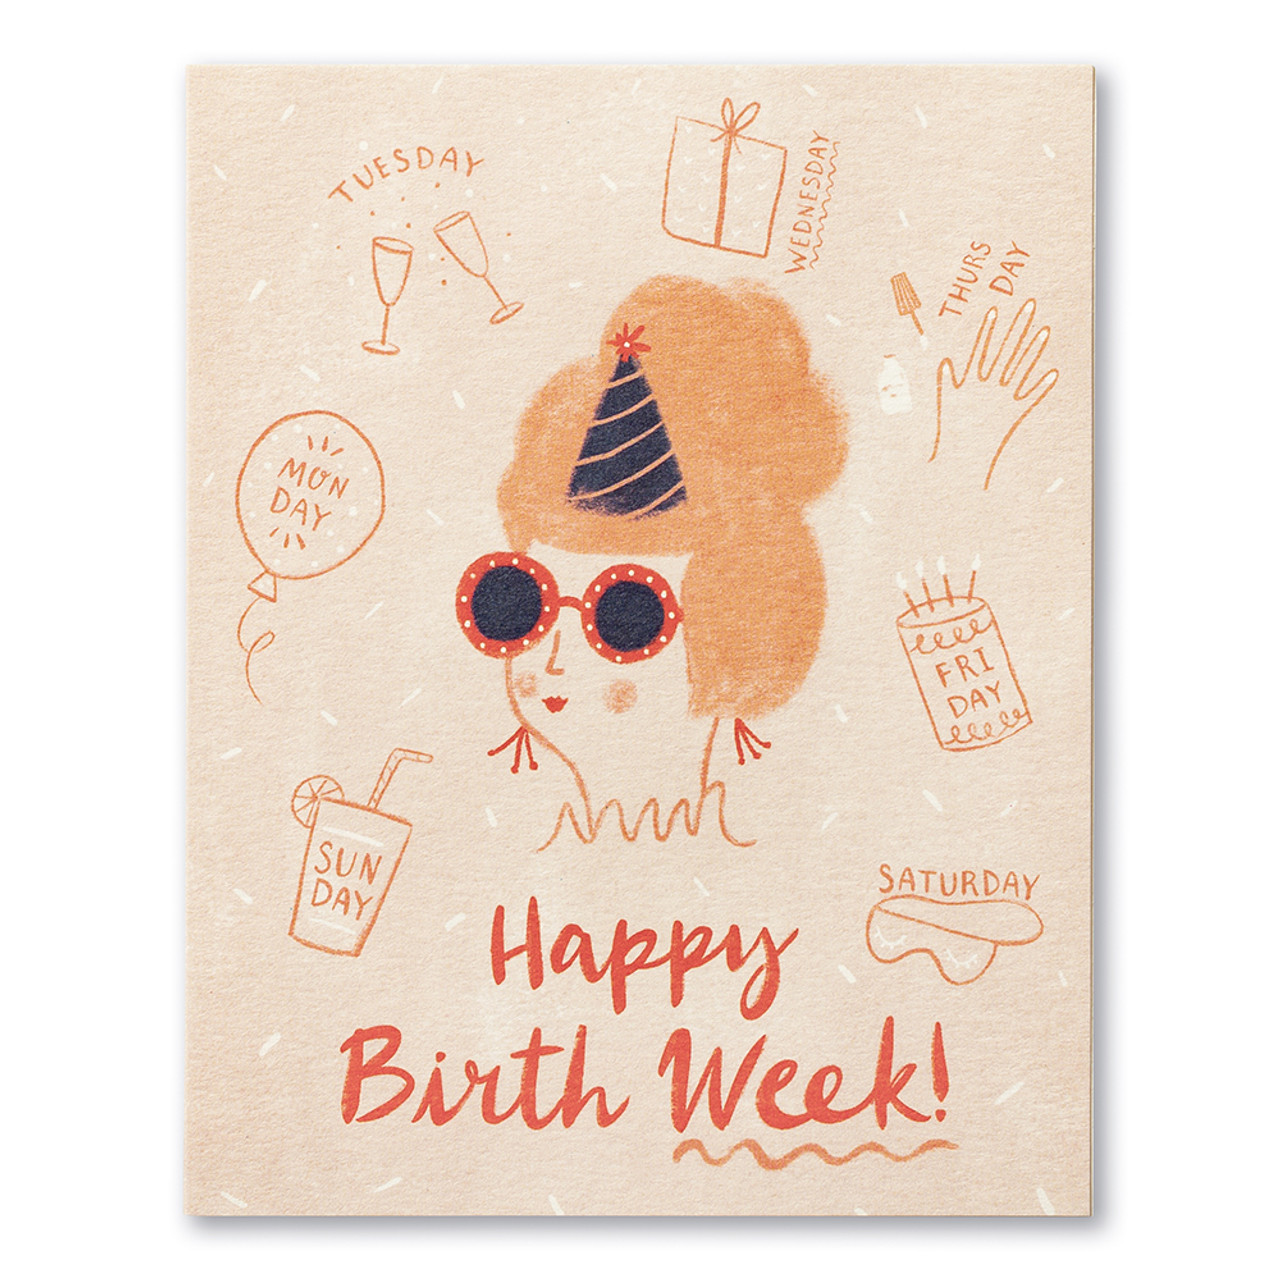 Simple Birthday Card - Banners, Happy Birthday, Cute and Simple; Custom